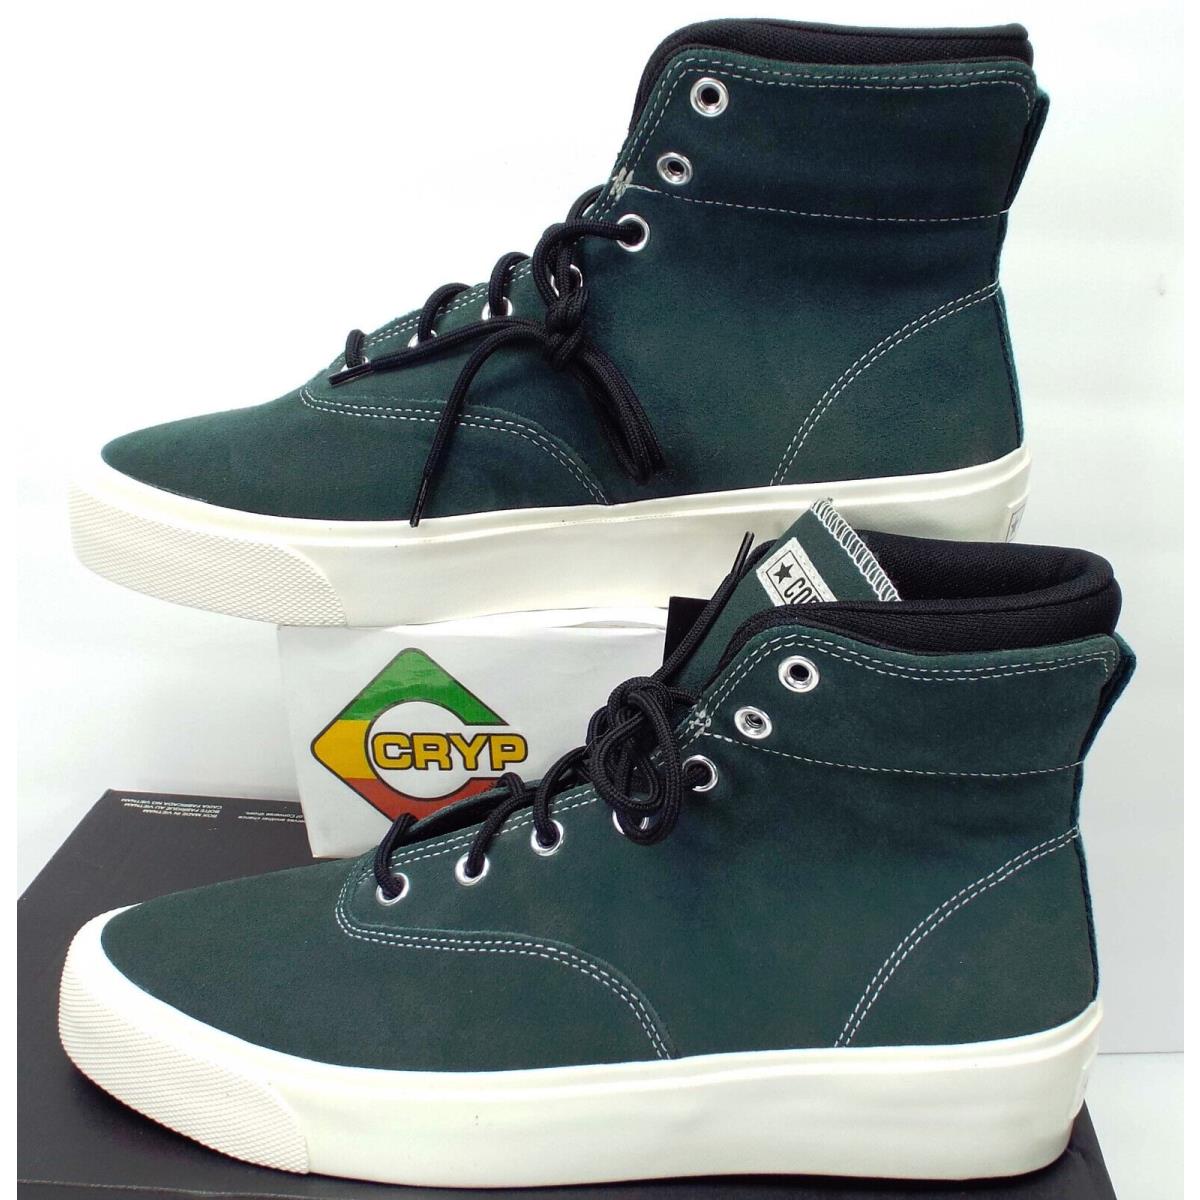 Mens 12 Converse Skid Grip Hi Nubuch Suede Succulent Green Shoes MSR$110 169618C